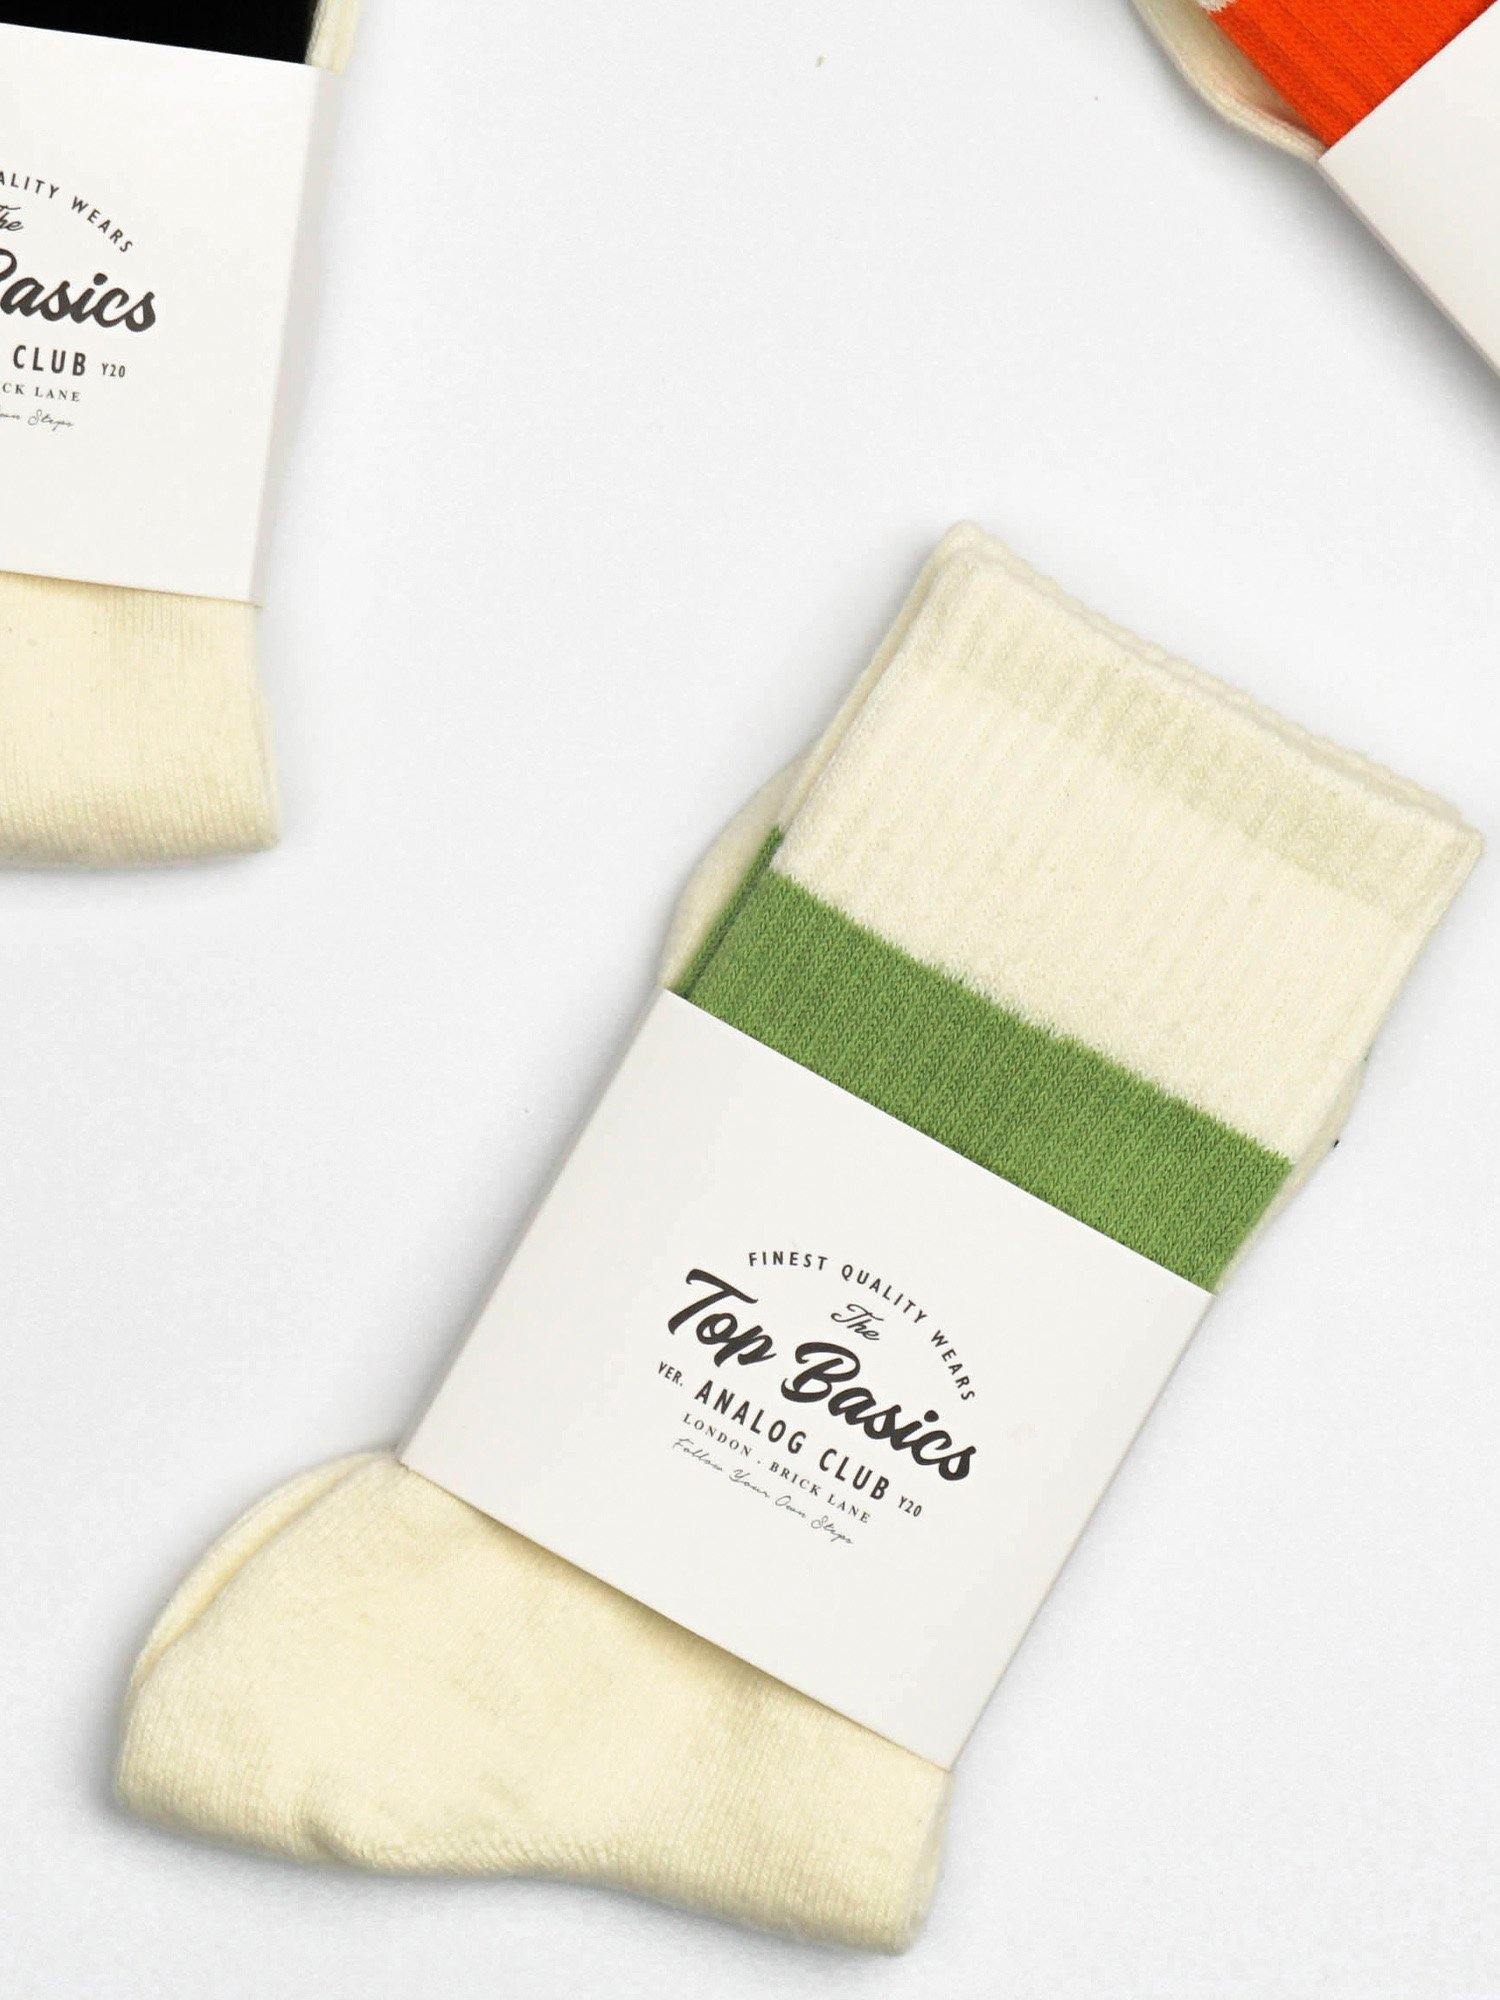 TopBasics Single Stripe Cotton Long Socks